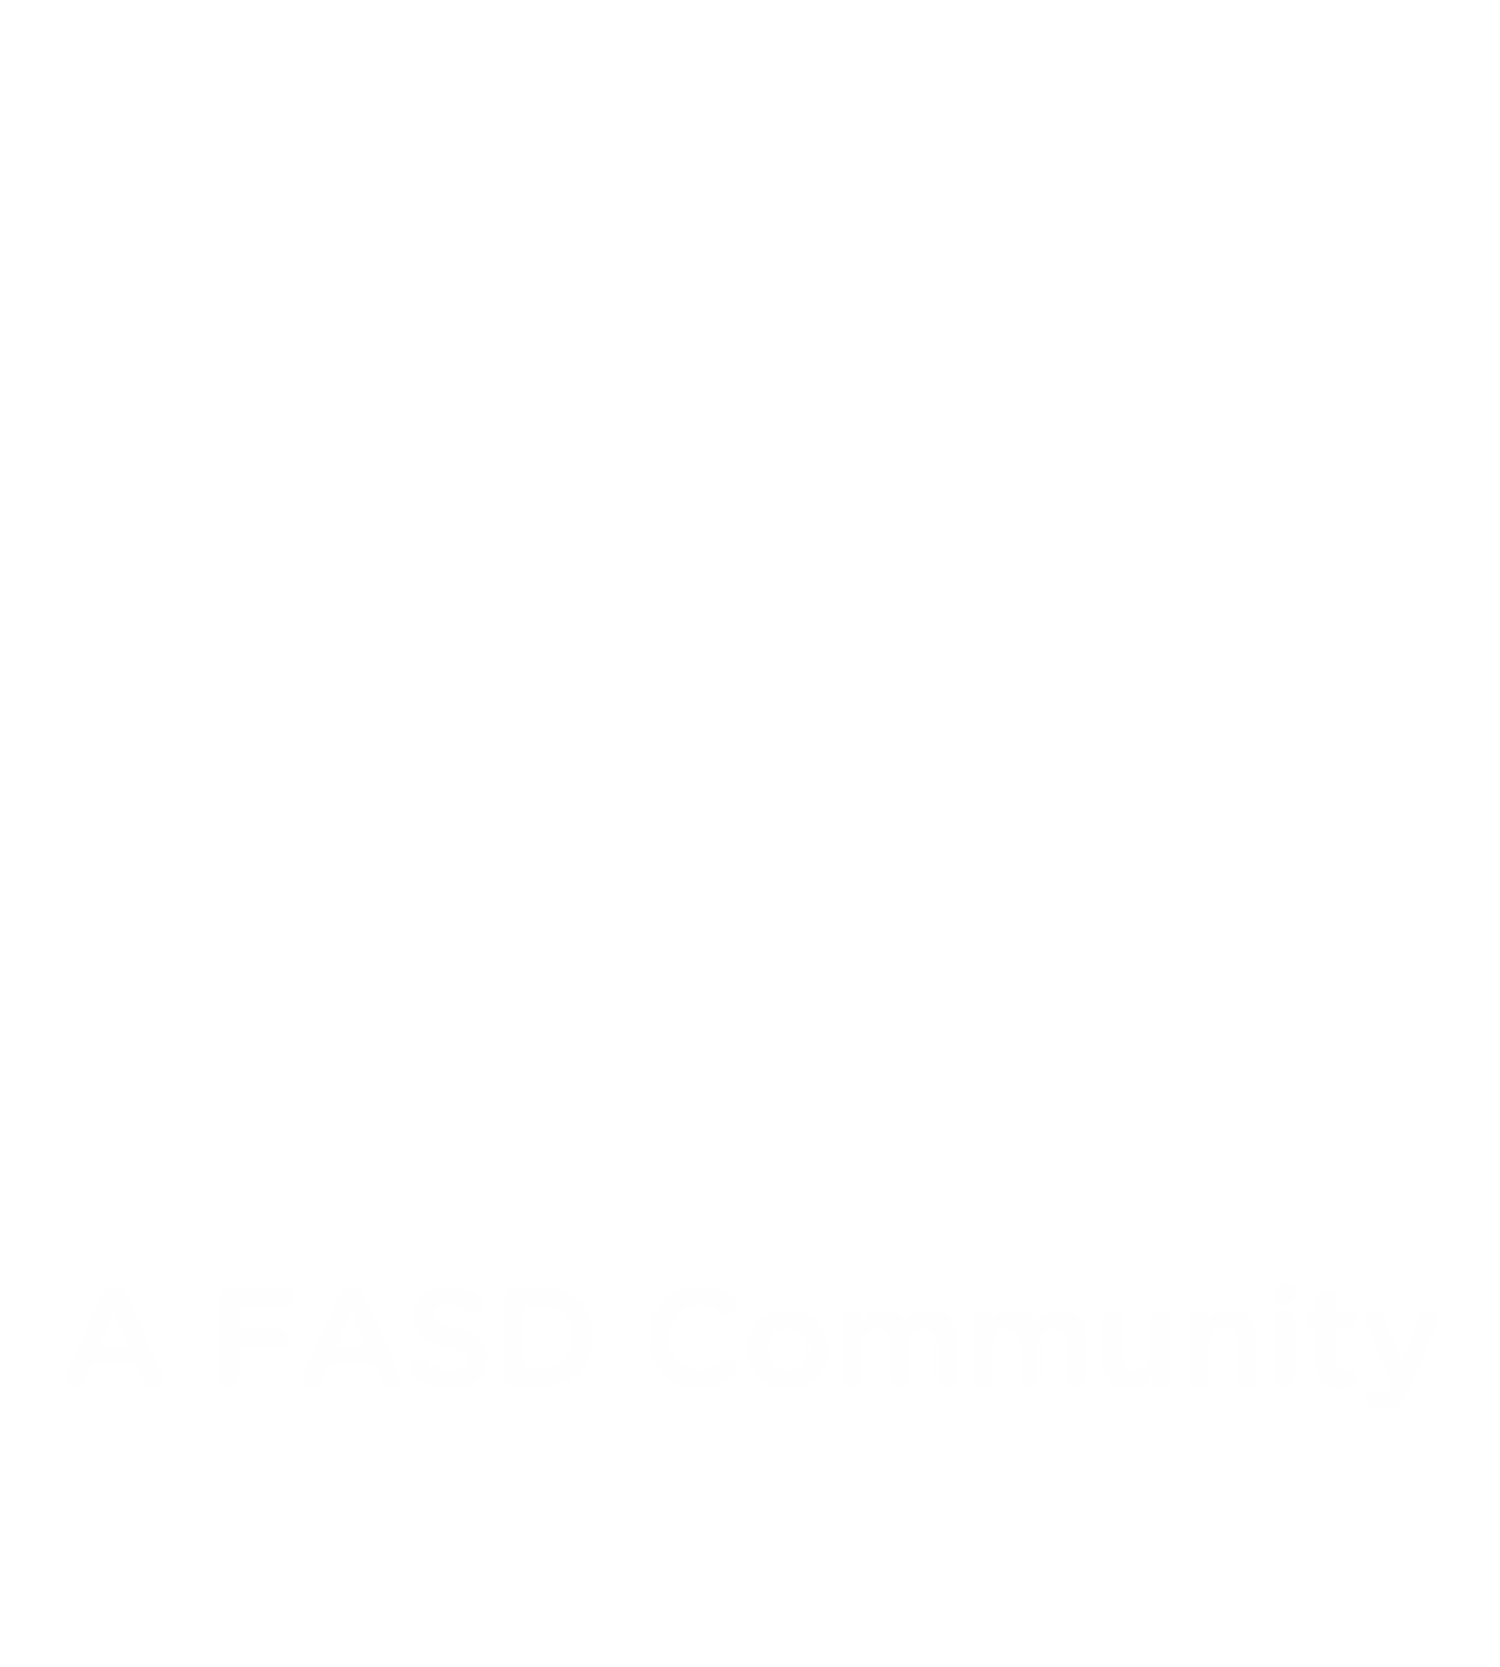 CAMP - A FASD Community